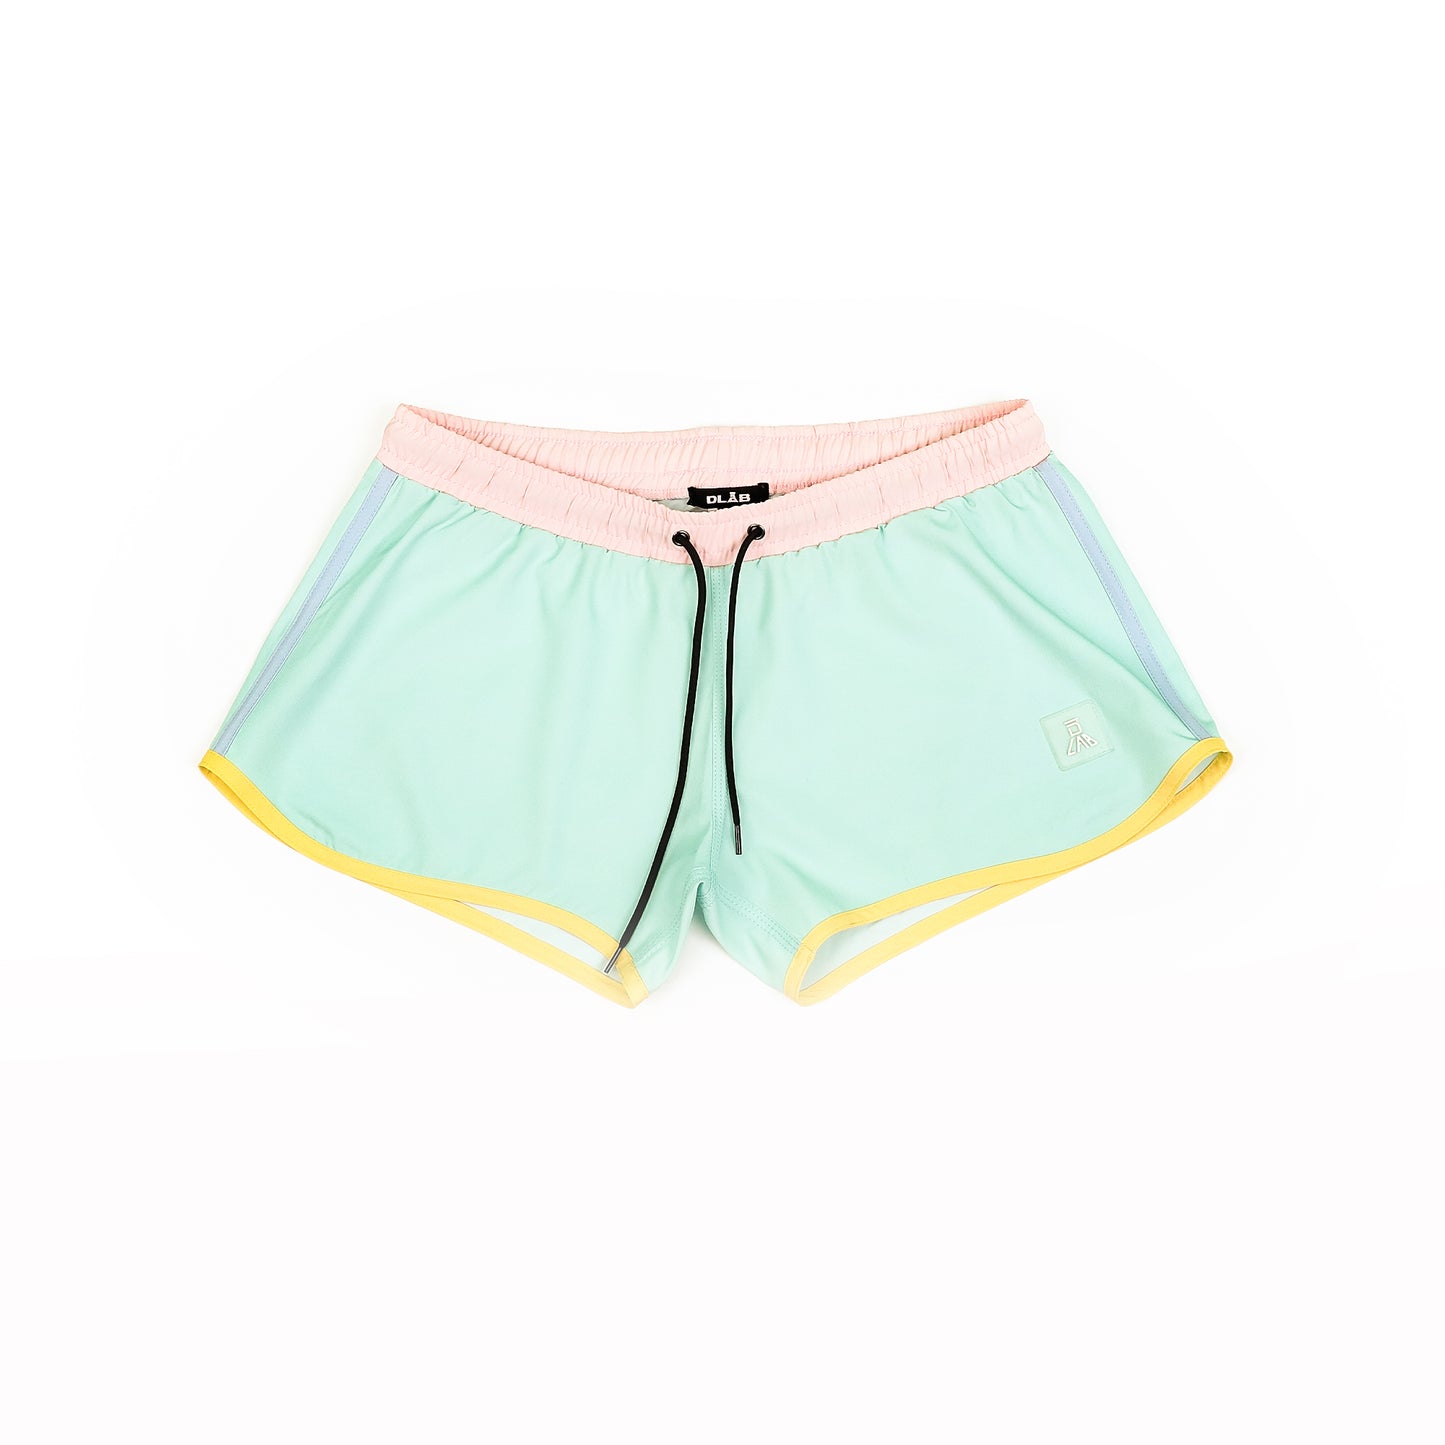 DLAB Women’s Board Shorts (Mint Green)